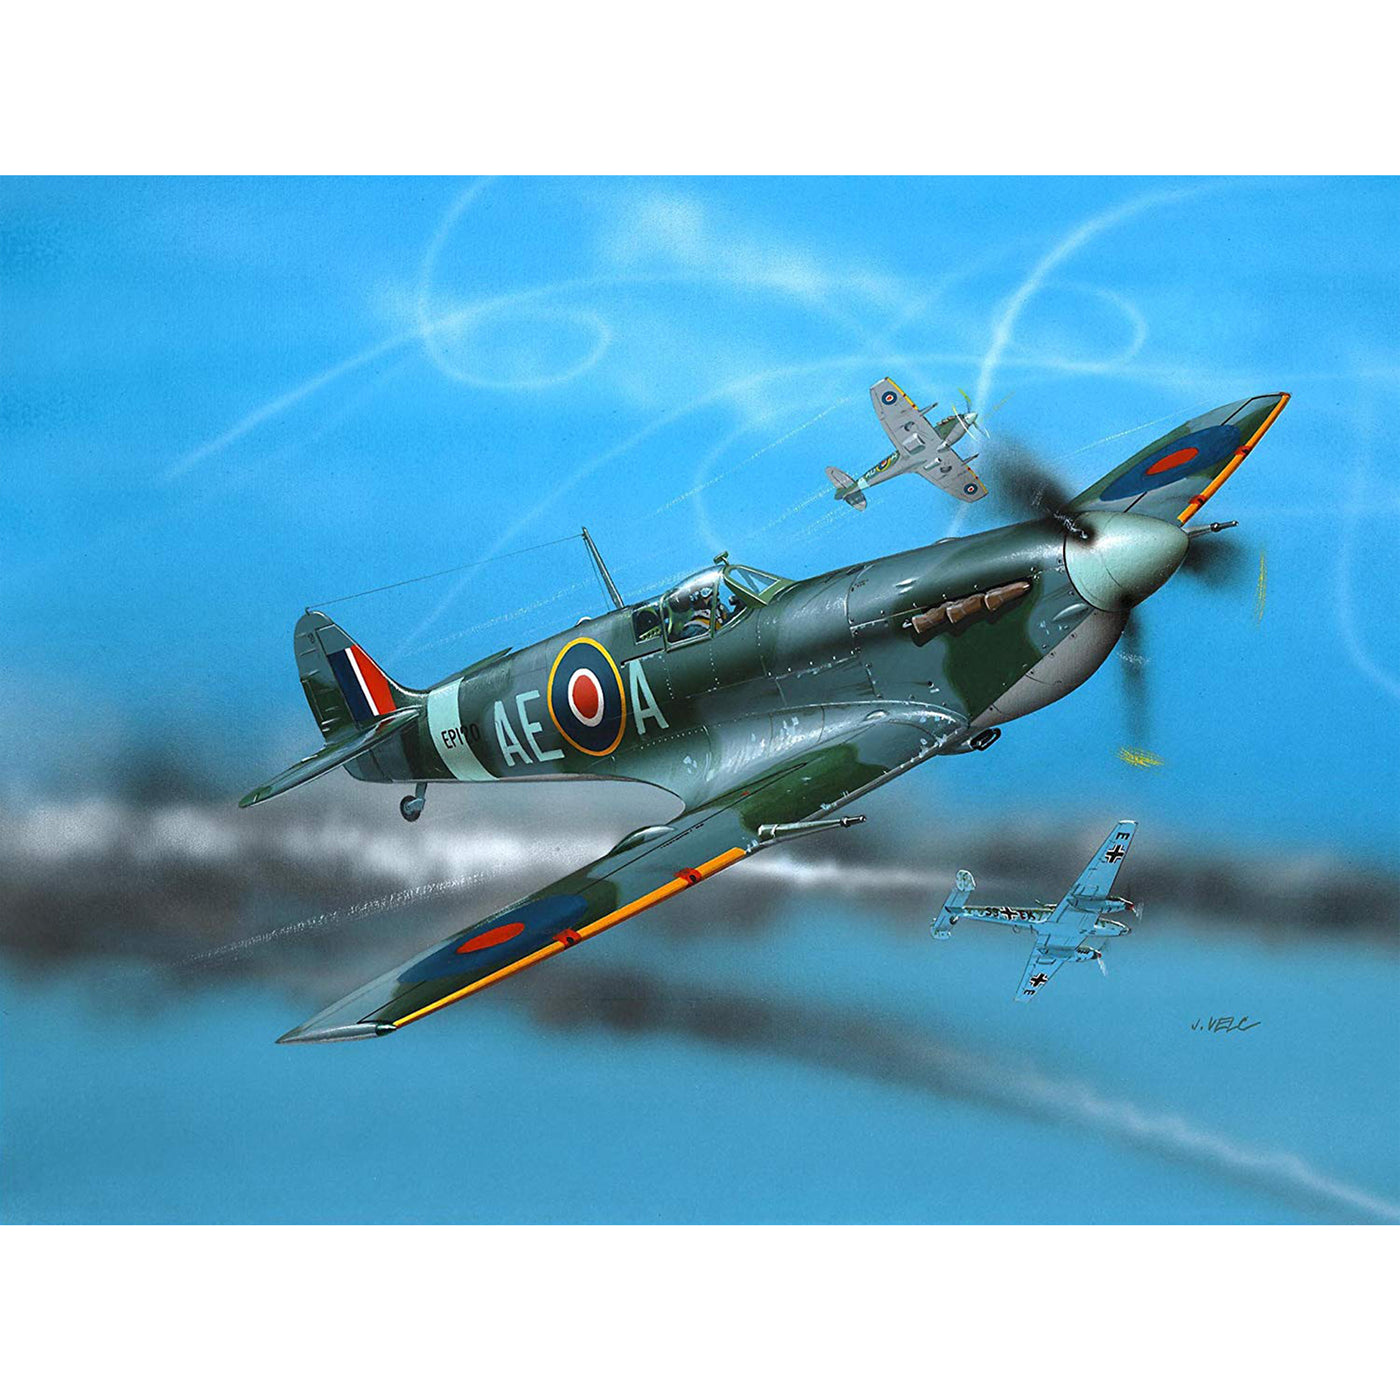 1/72 Supermarine Spitfire Mk.V